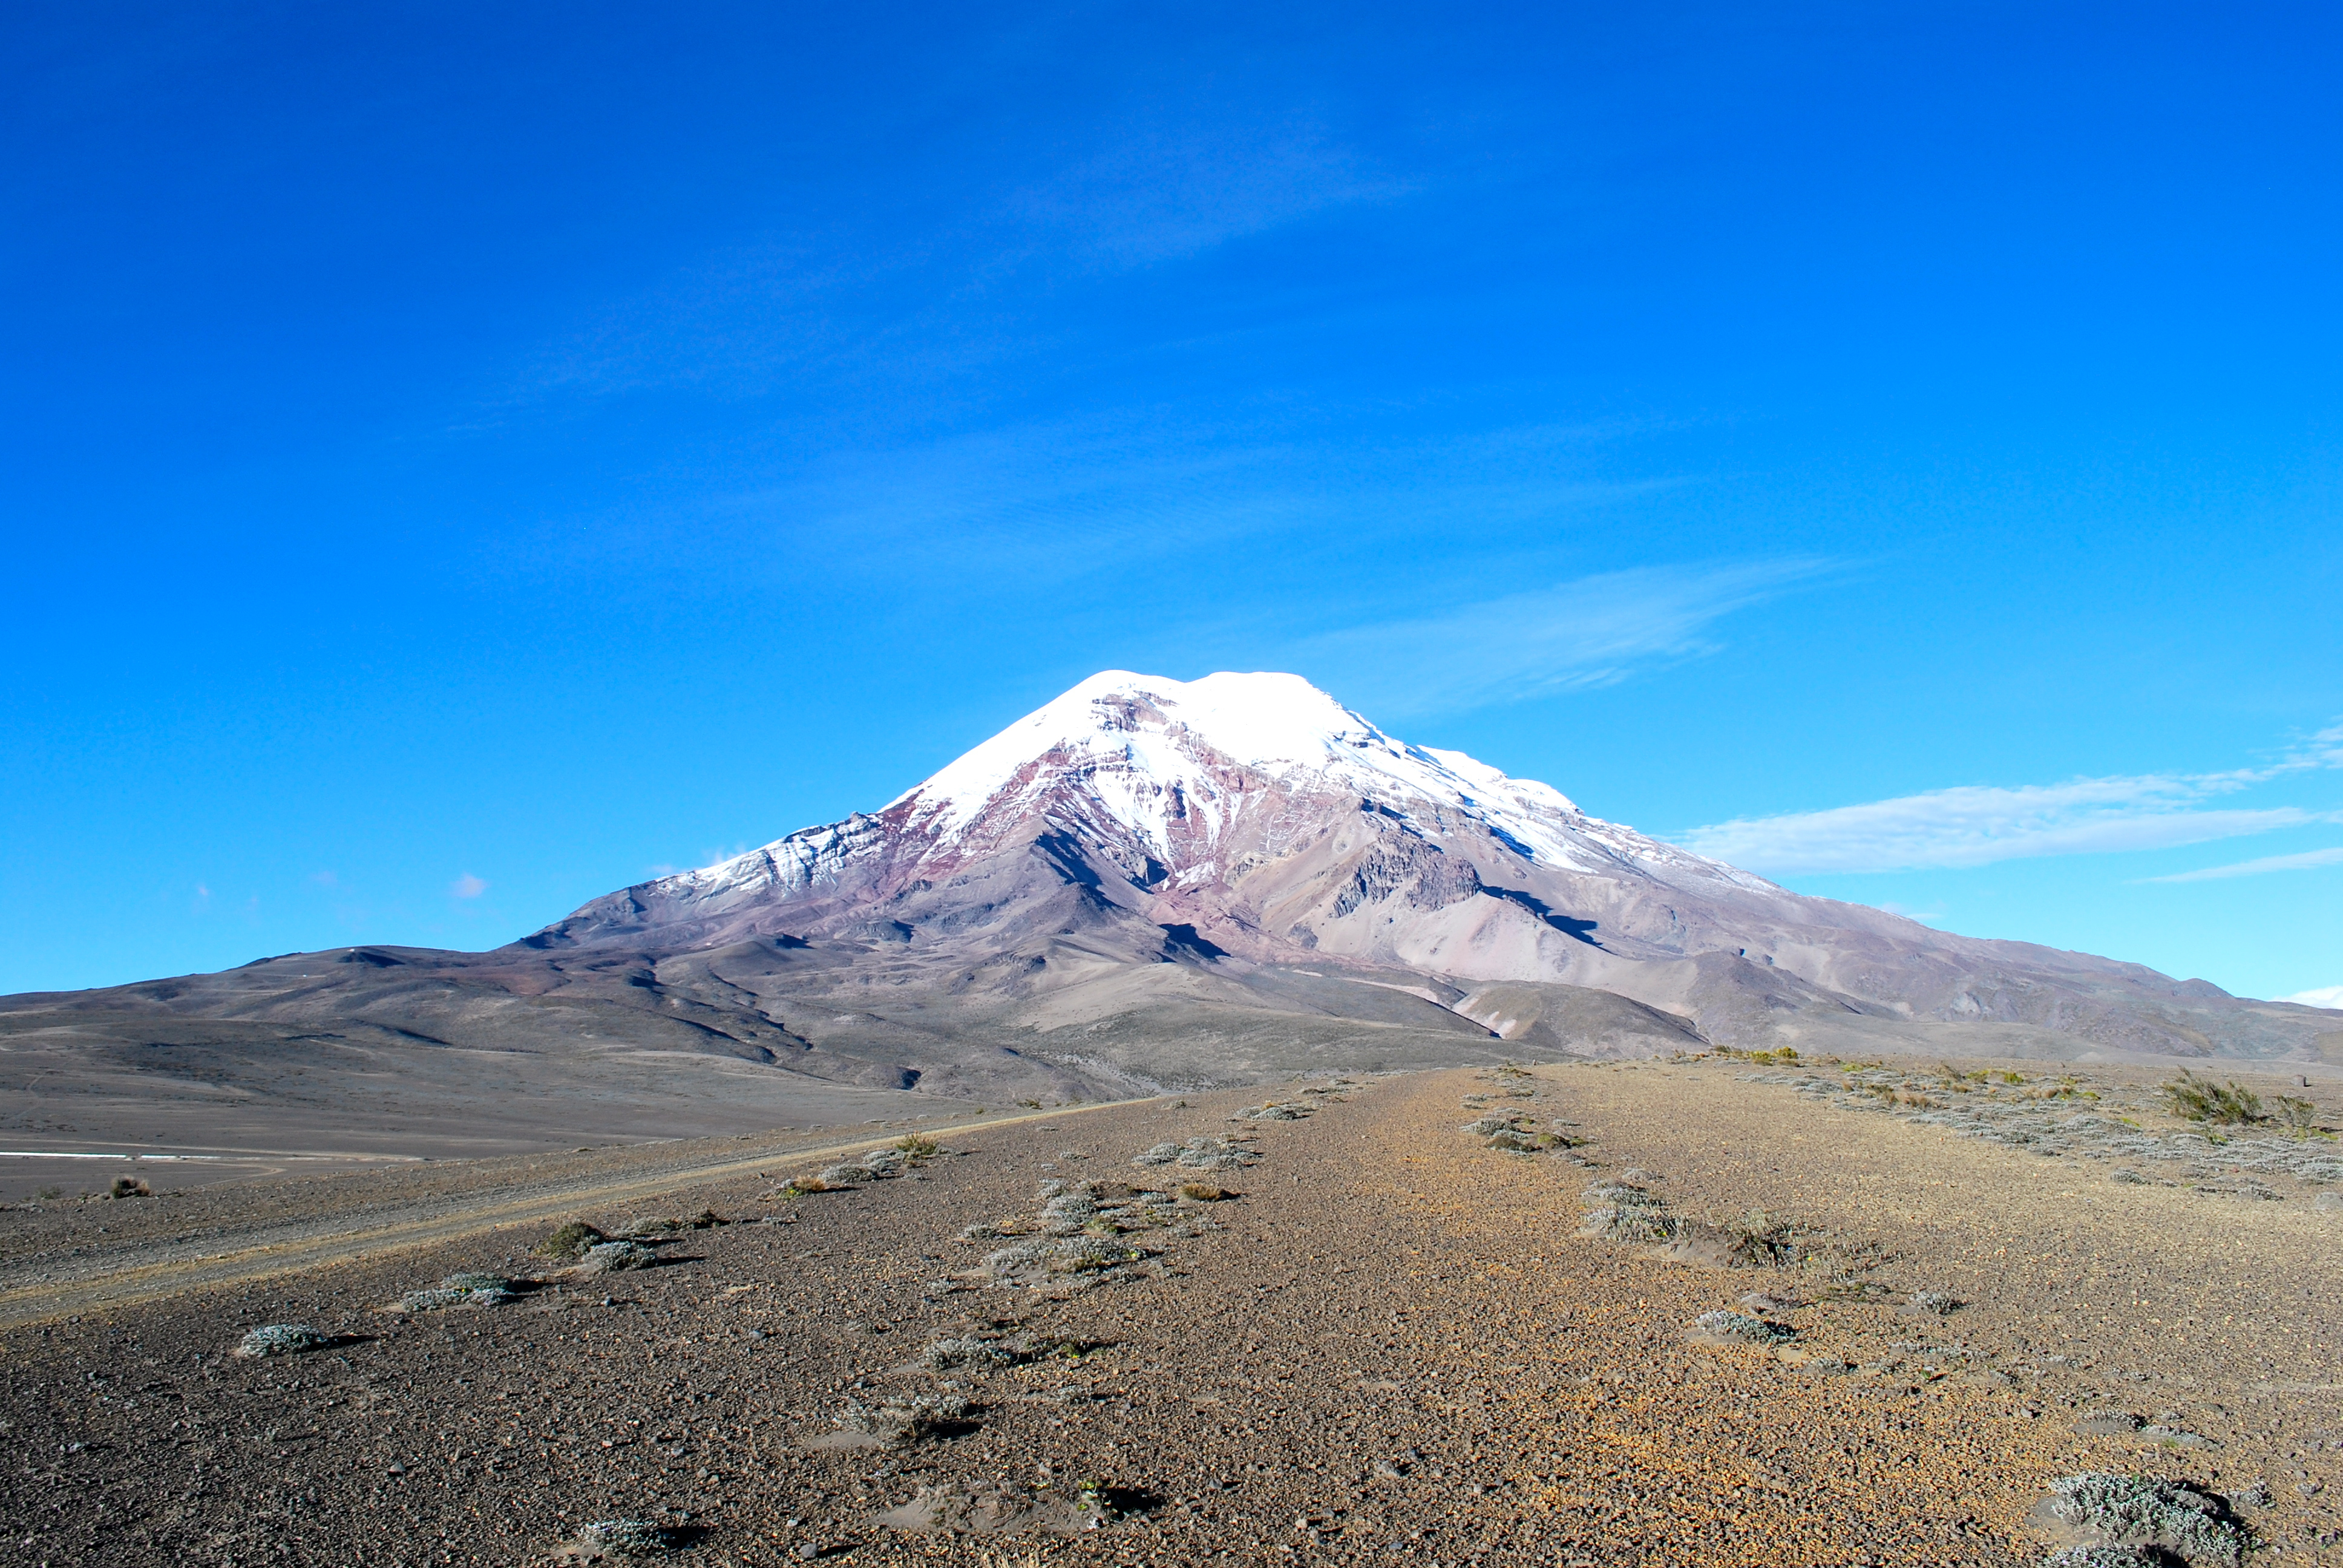 Chimborazo volcano. Image courtesy of David Torres Costales Pictures of Ecuador